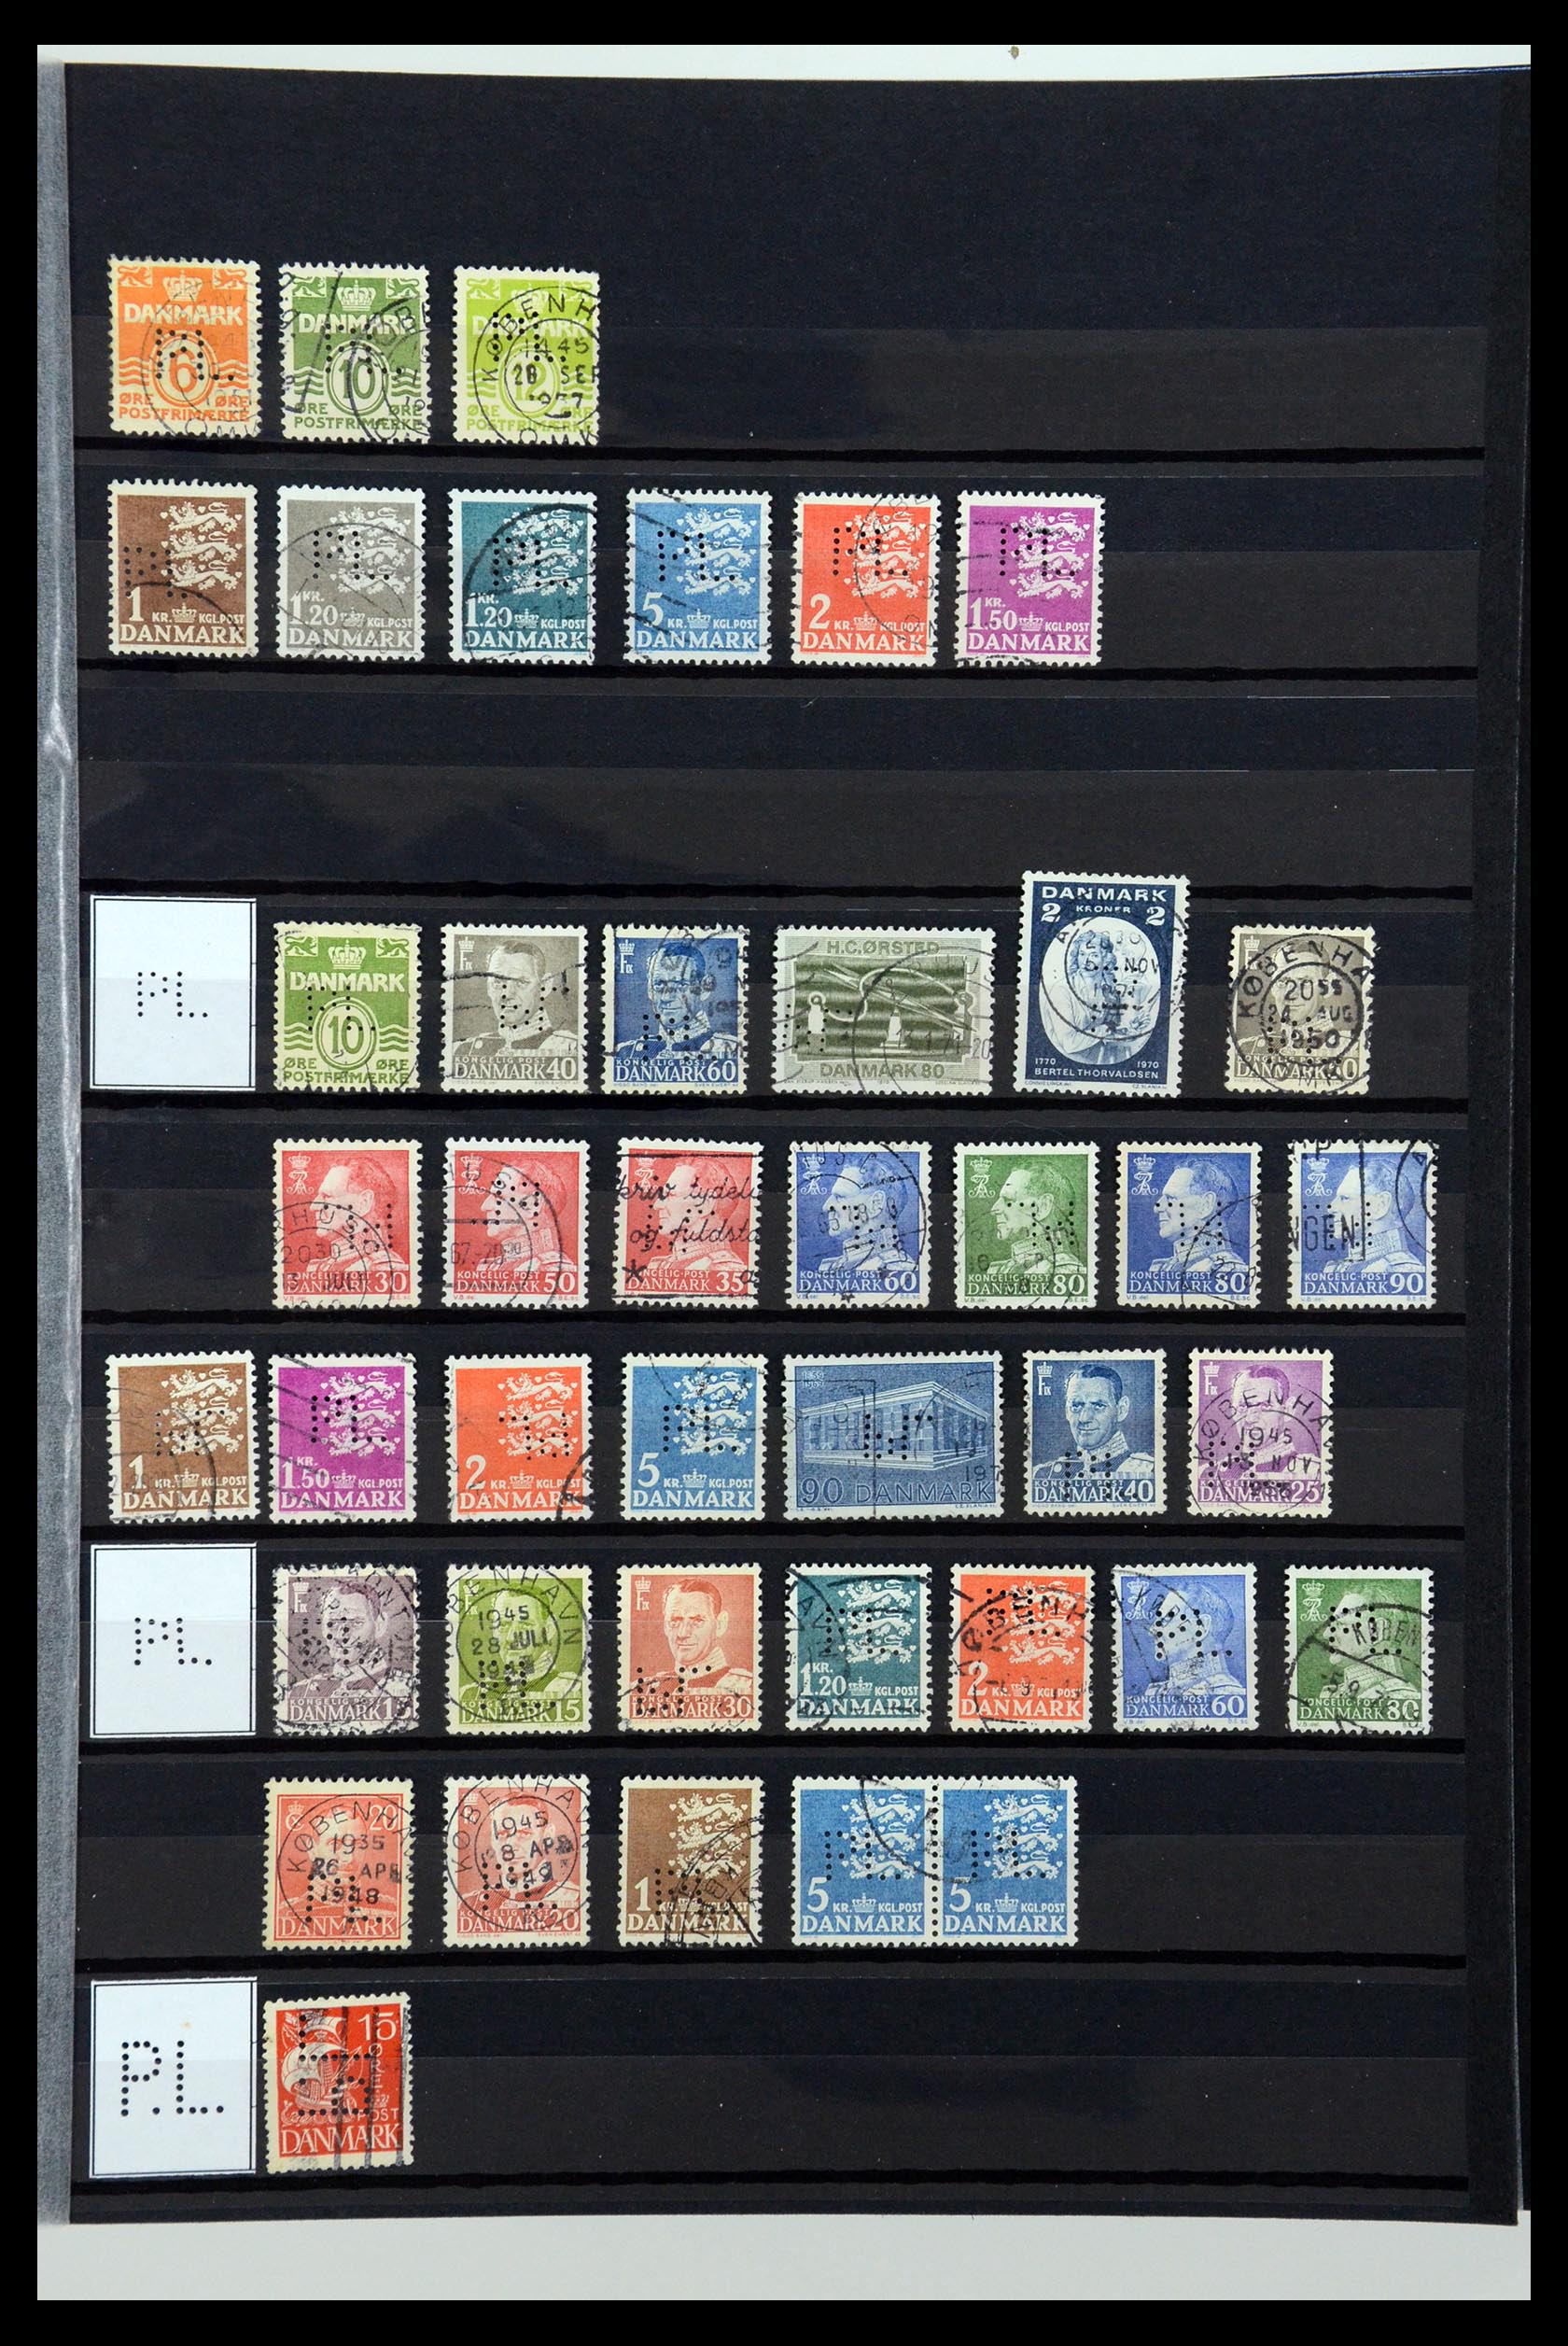 36396 194 - Stamp collection 36396 Denmark perfins.